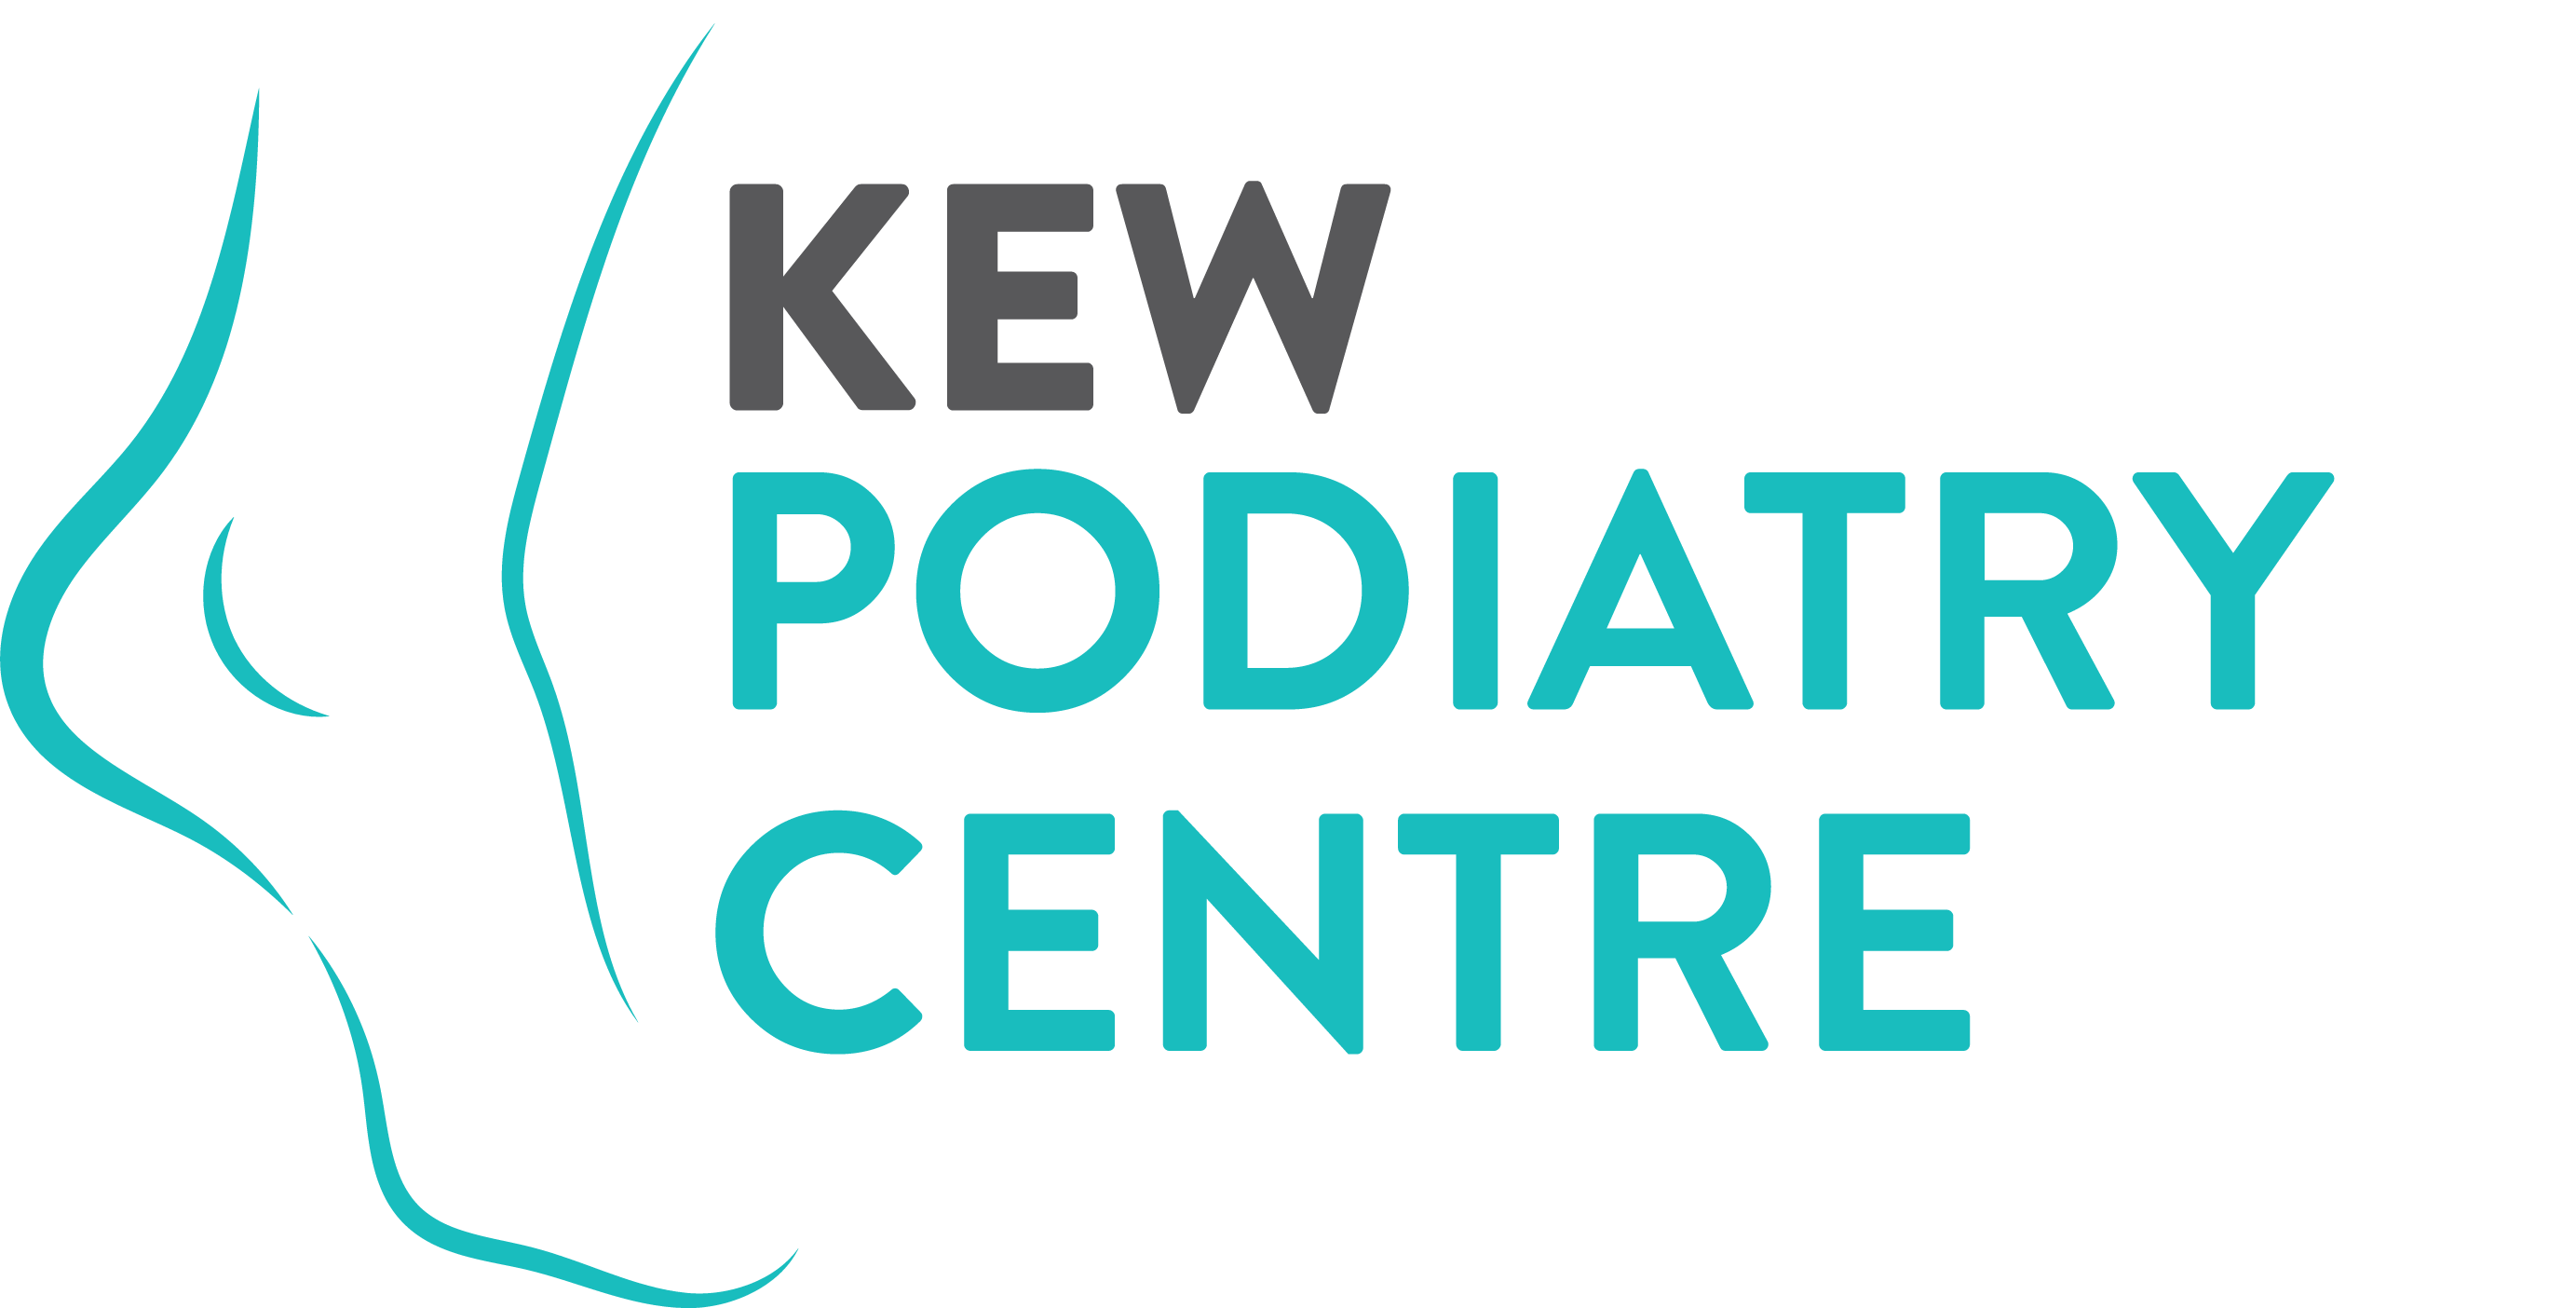 Kew Podiatry Centre